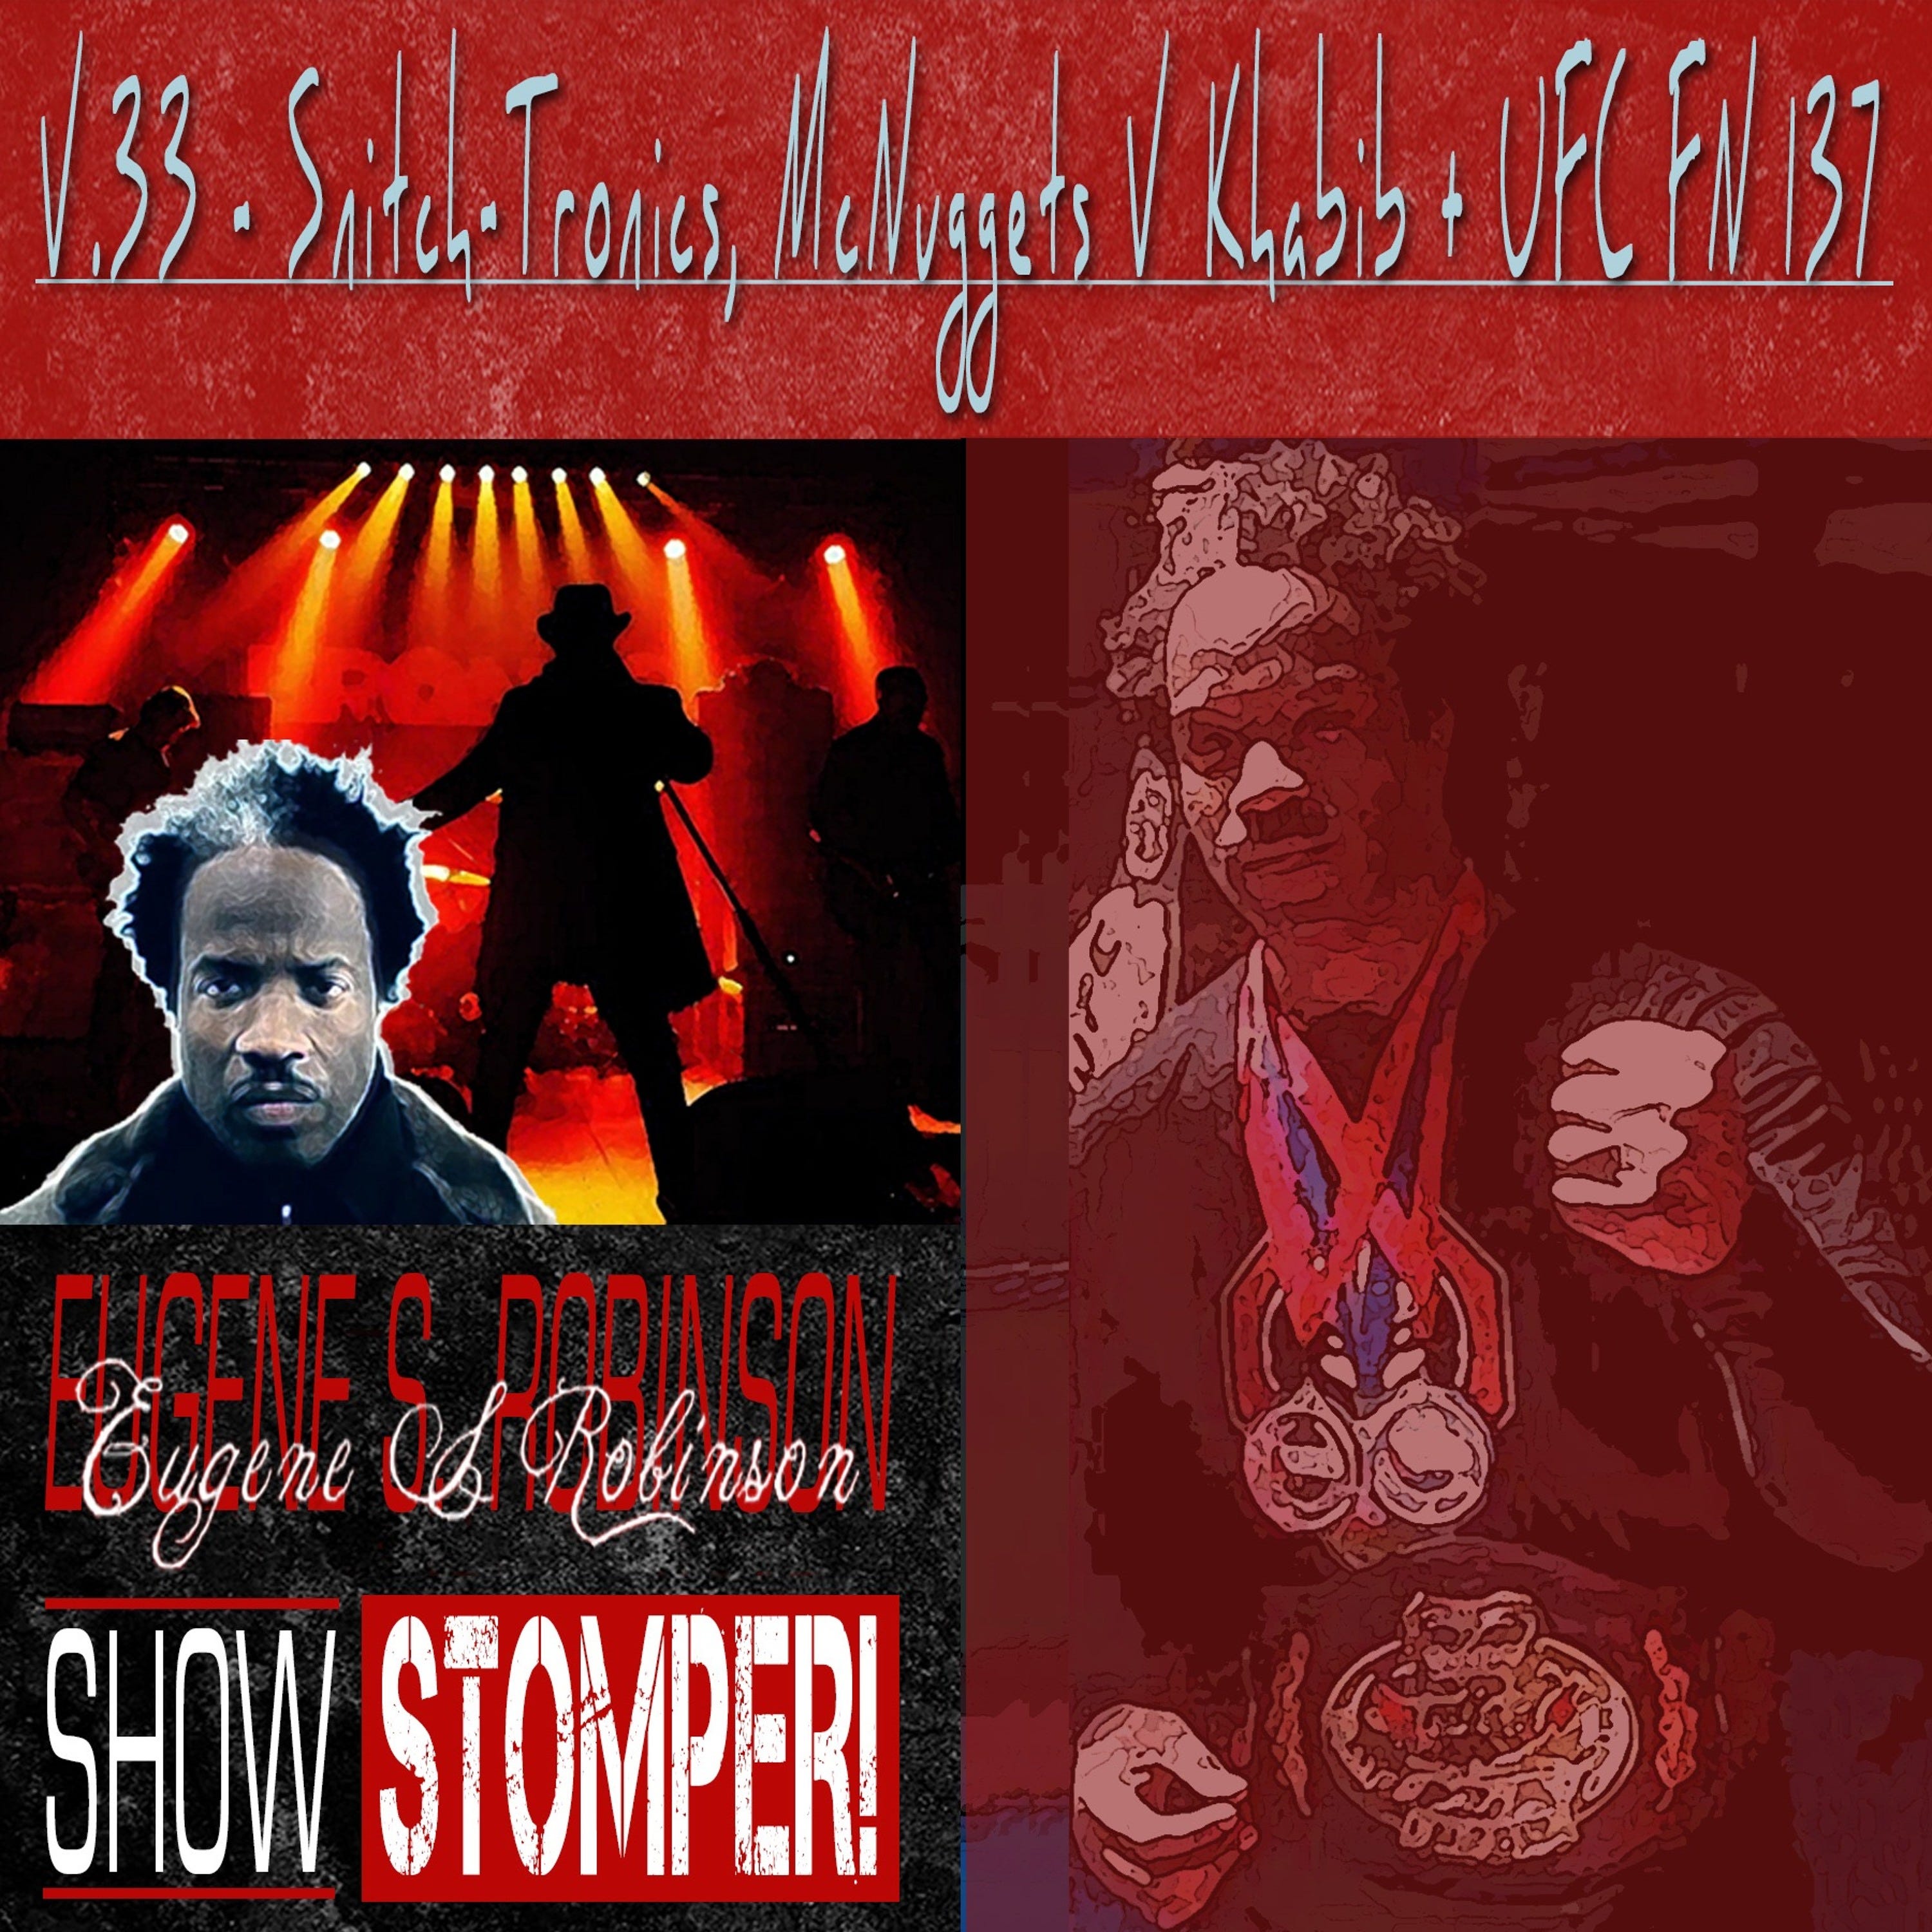 The Eugene S. Robinson Show Stomper! V.33 - Snitch-Tronics, McNuggets V Khabib + UFC FN 137